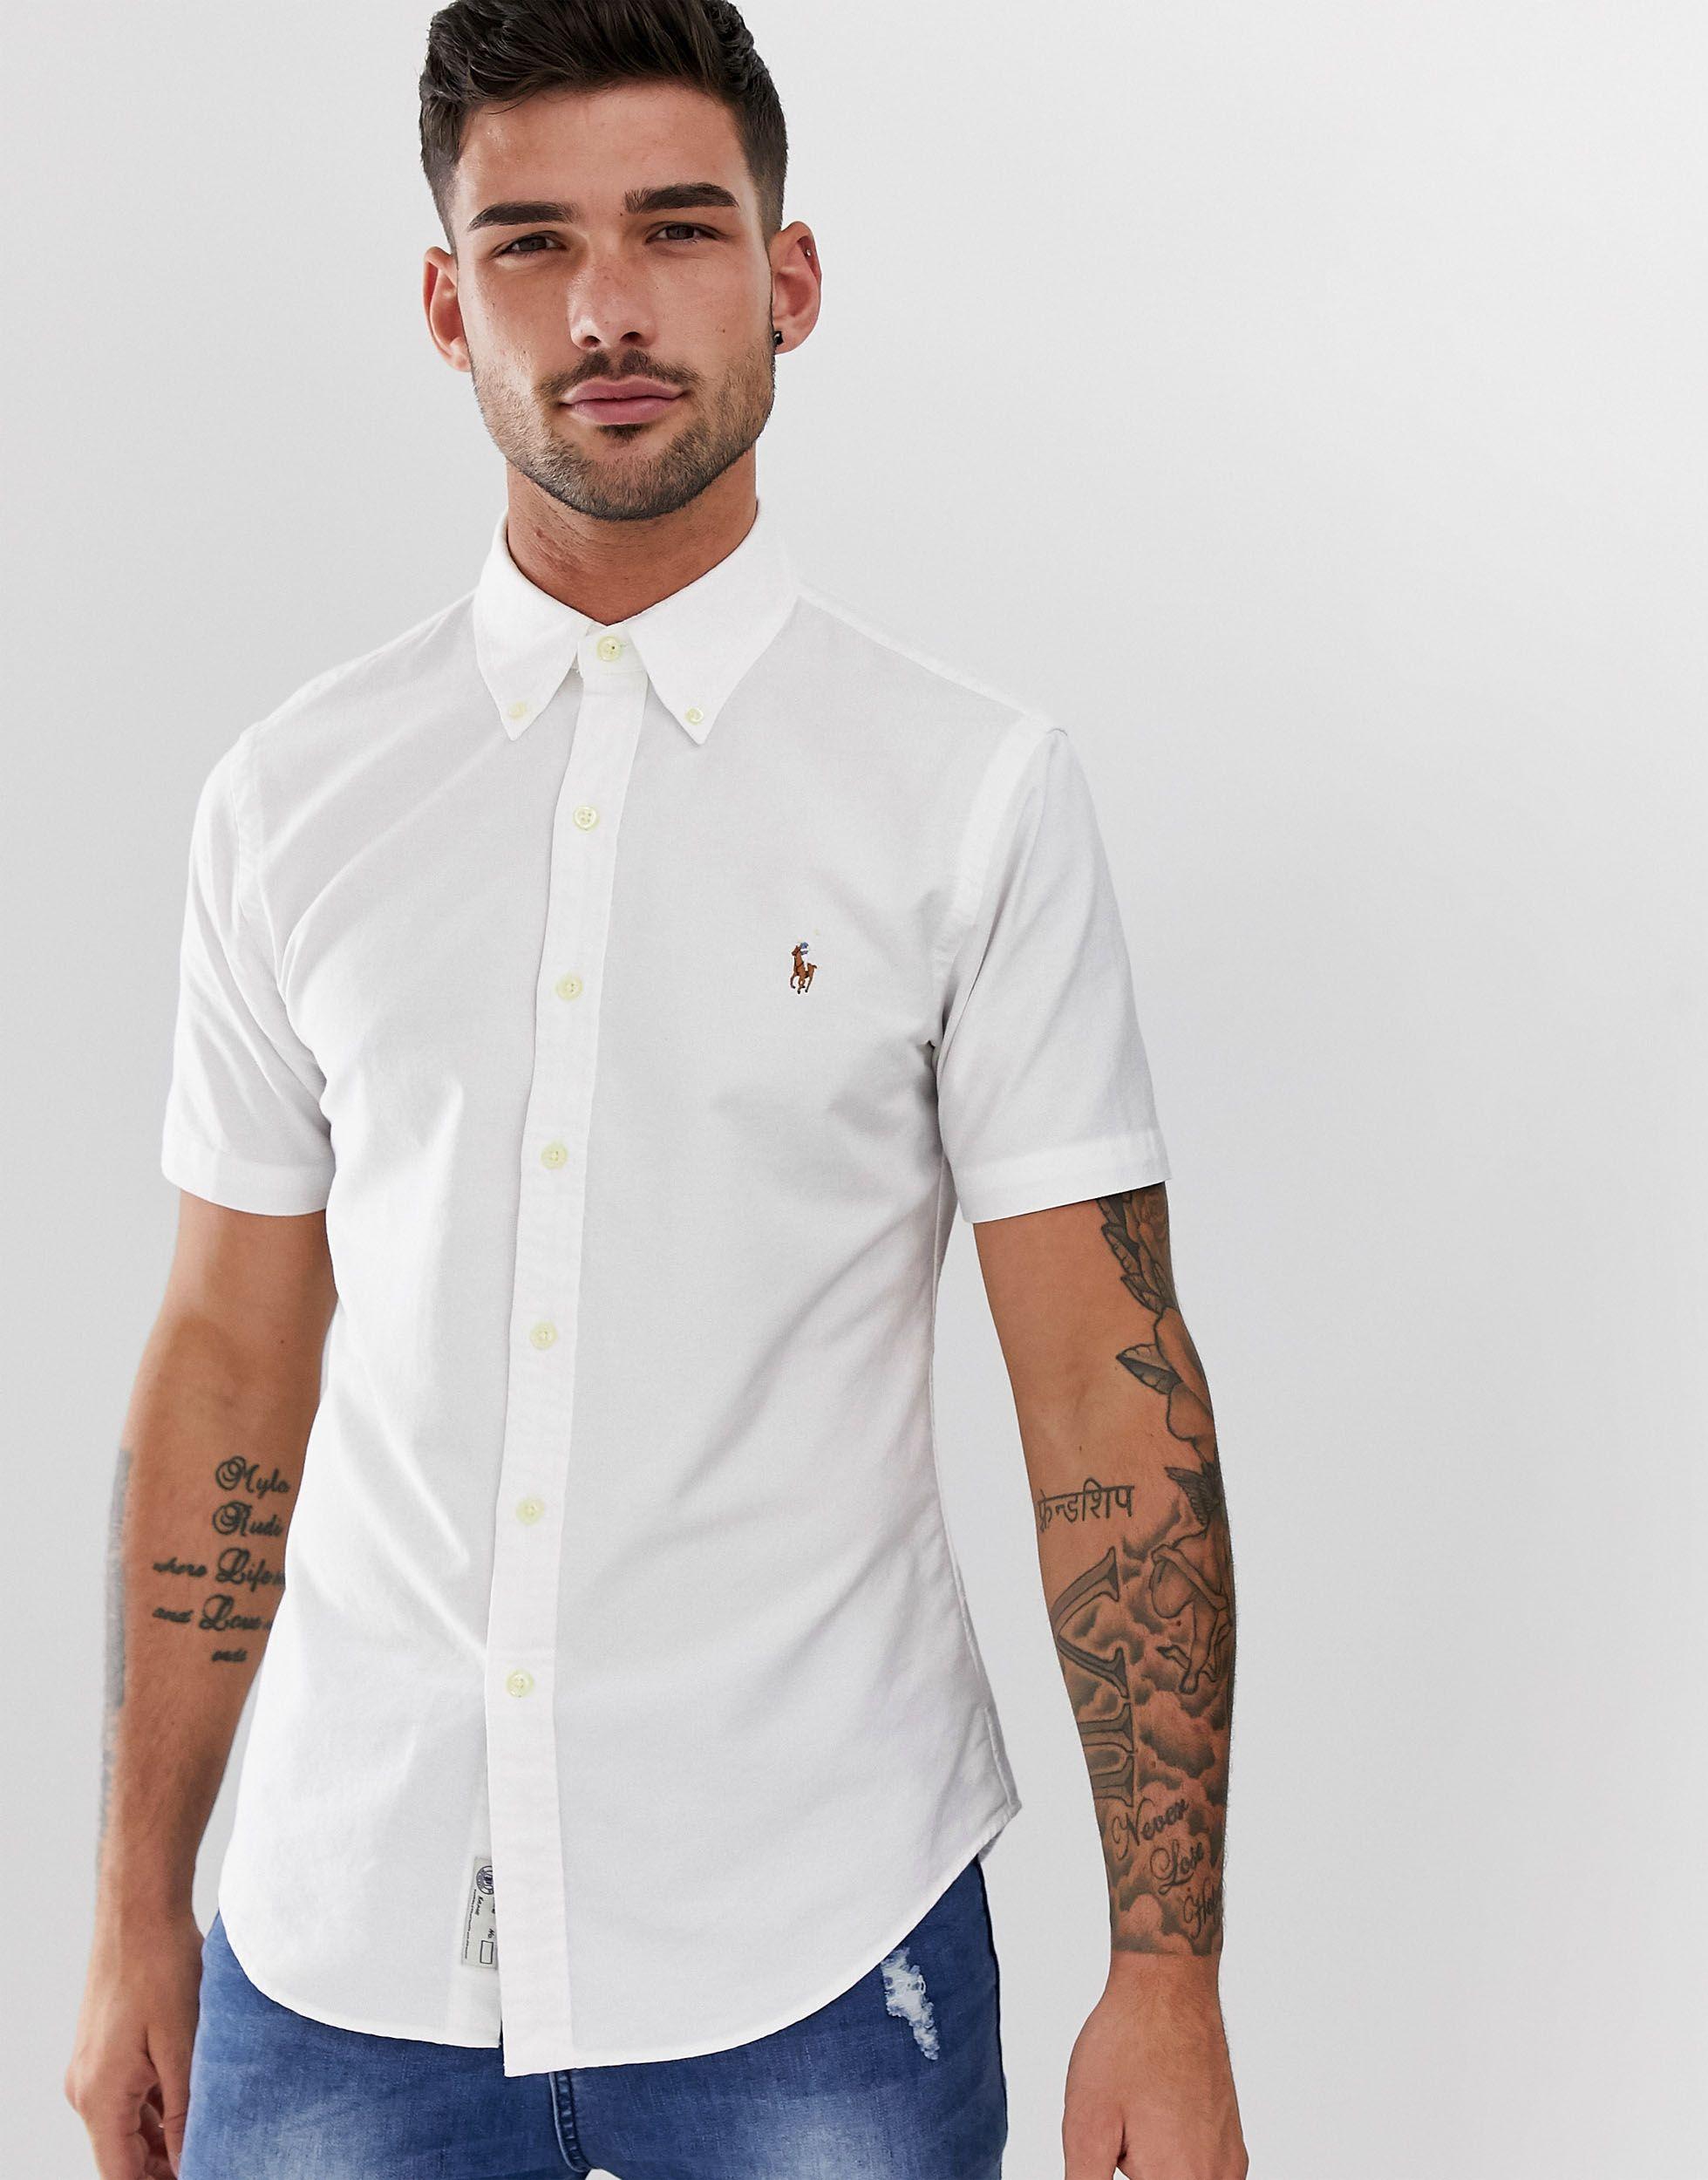 Polo Ralph Lauren Short Sleeve Oxford Shirt Slim Fit Button Down Logo in White for Men - Lyst